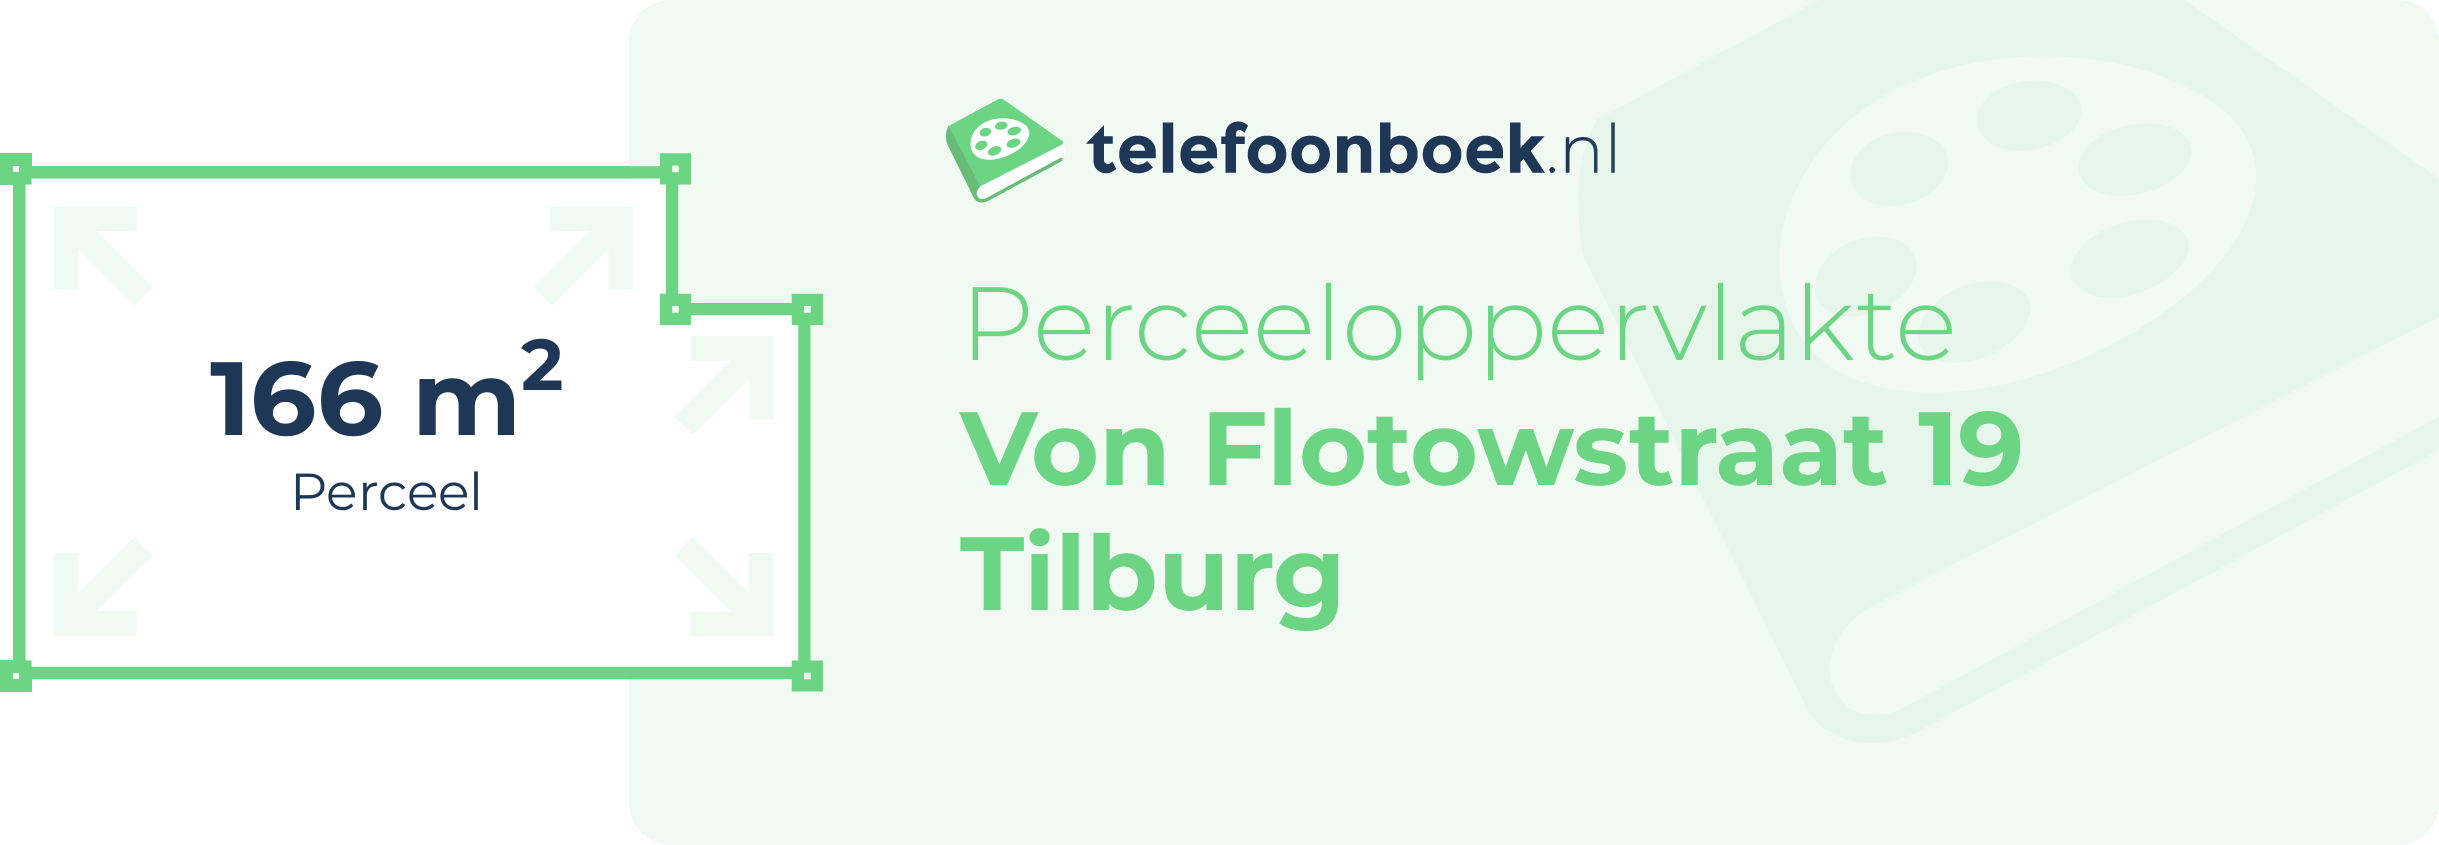 Perceeloppervlakte Von Flotowstraat 19 Tilburg